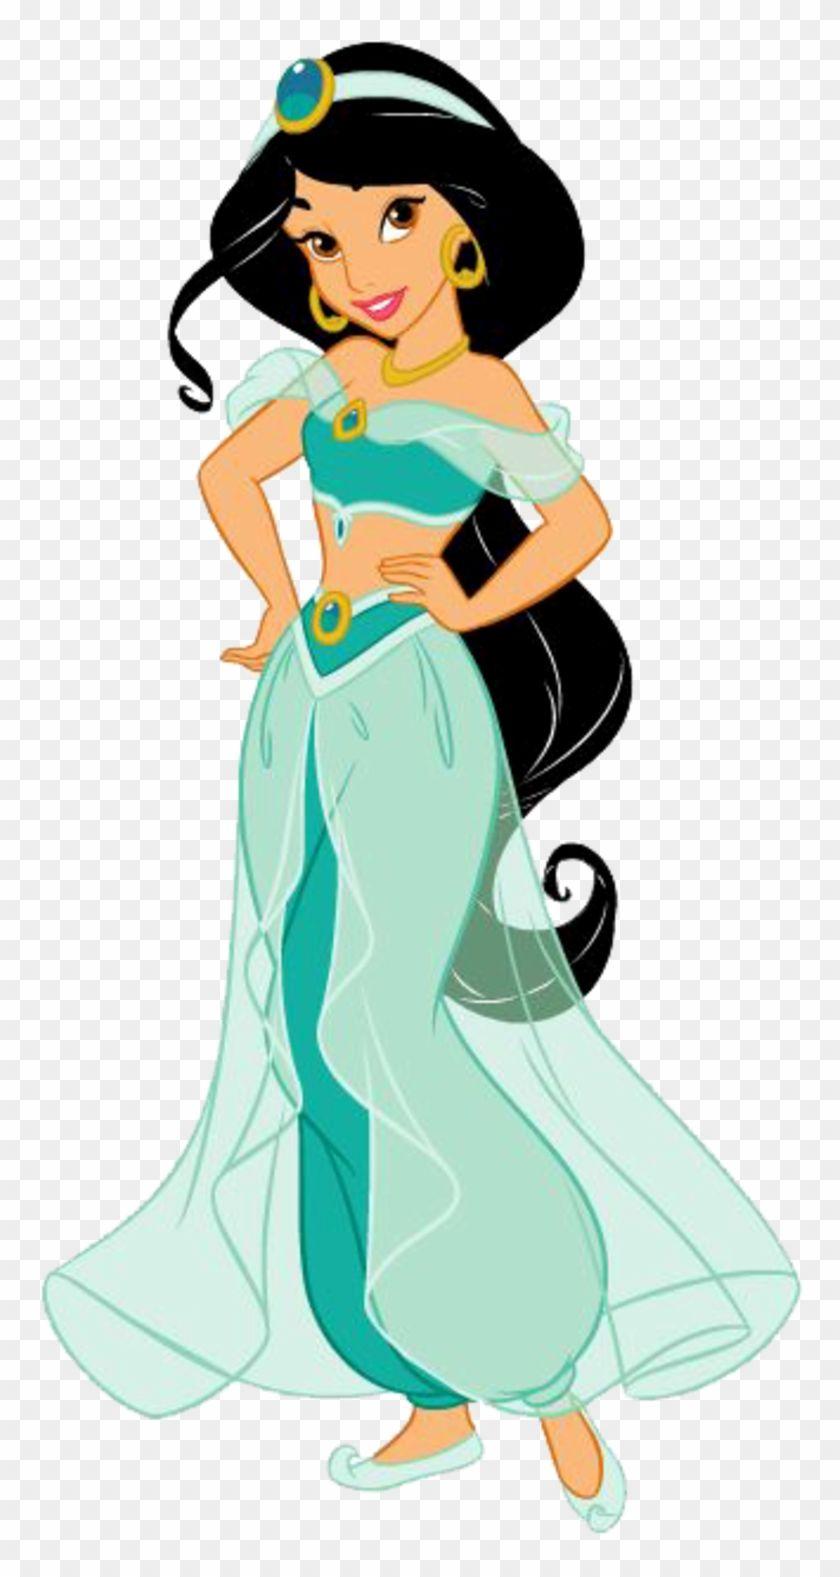 Disney Princess Transparent Logo - Jasmine Princess Princess Jasmine Transparent PNG